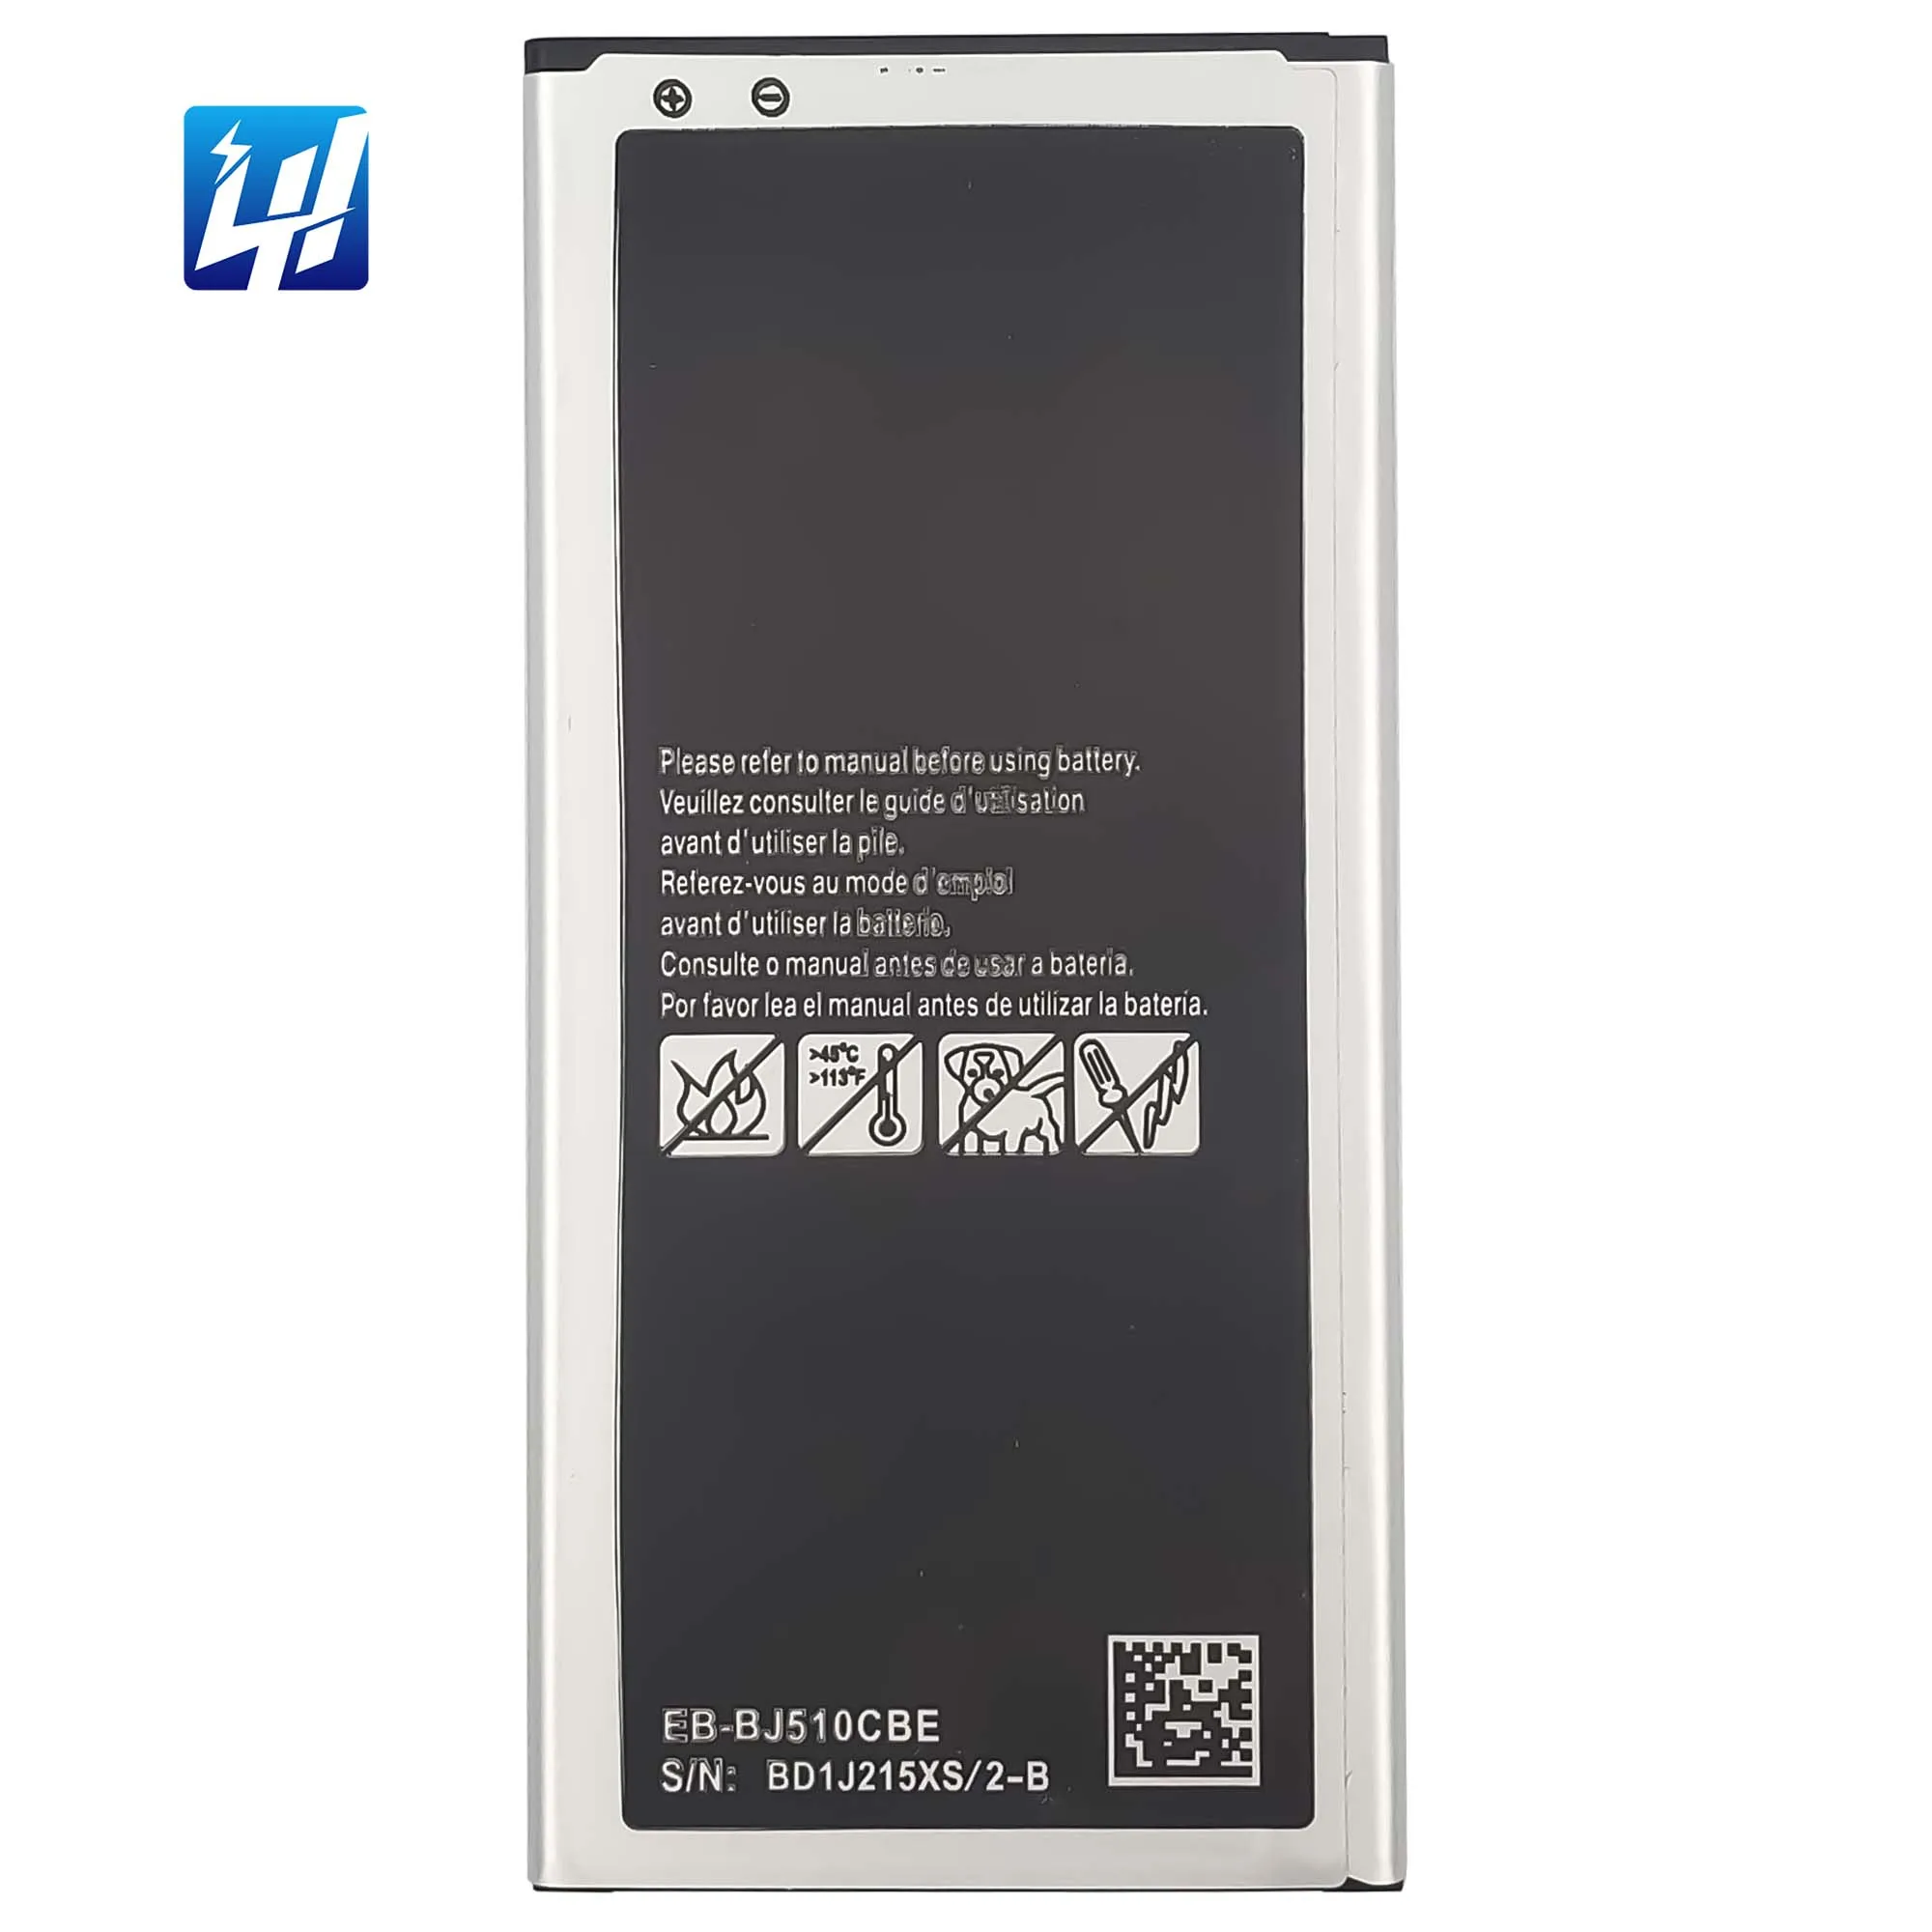 

EB-BJ510CBE J510 J510F J510G J510FN High quality mobile phone battery for Samsung Galaxy J5 2016